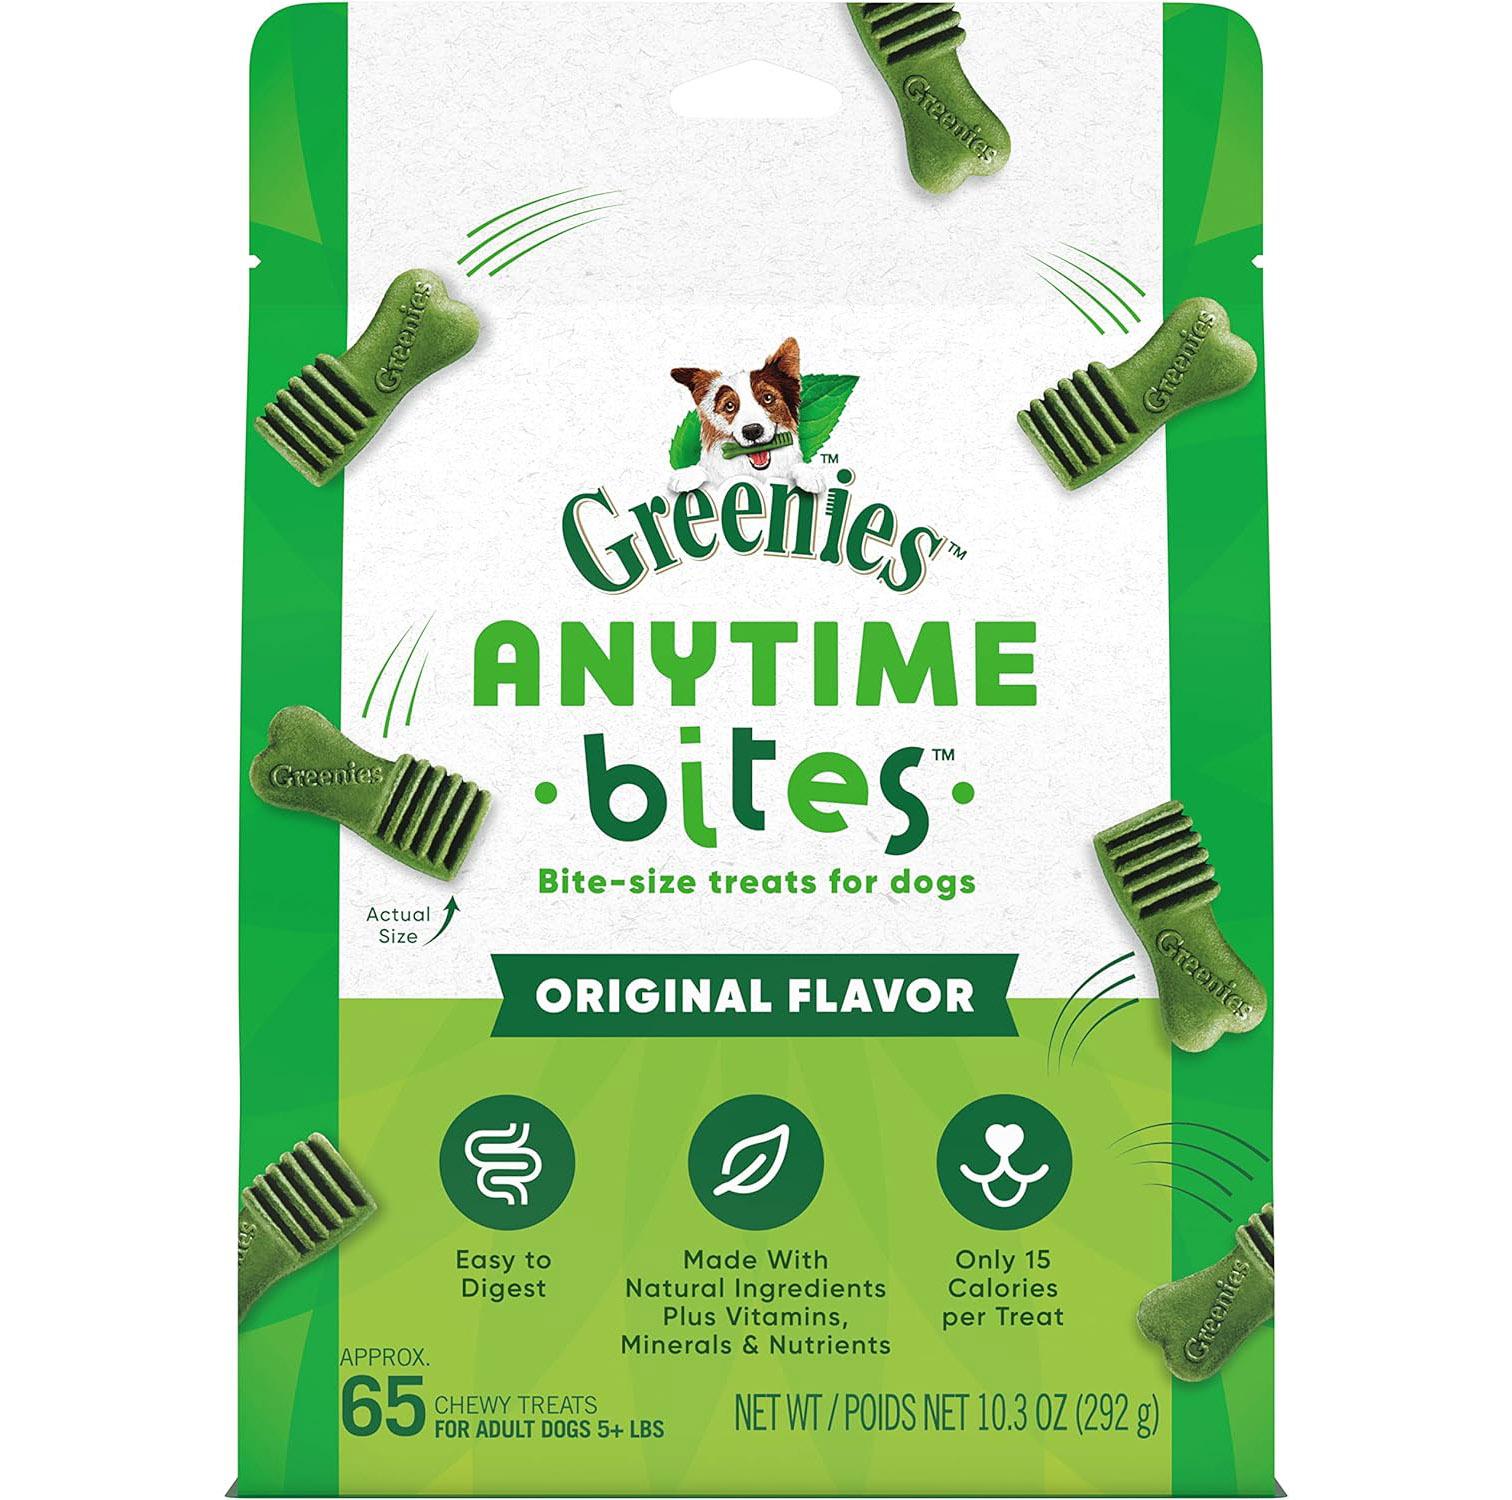 Greenies Anytime Bites Dog Treats for $7.51 Shipped